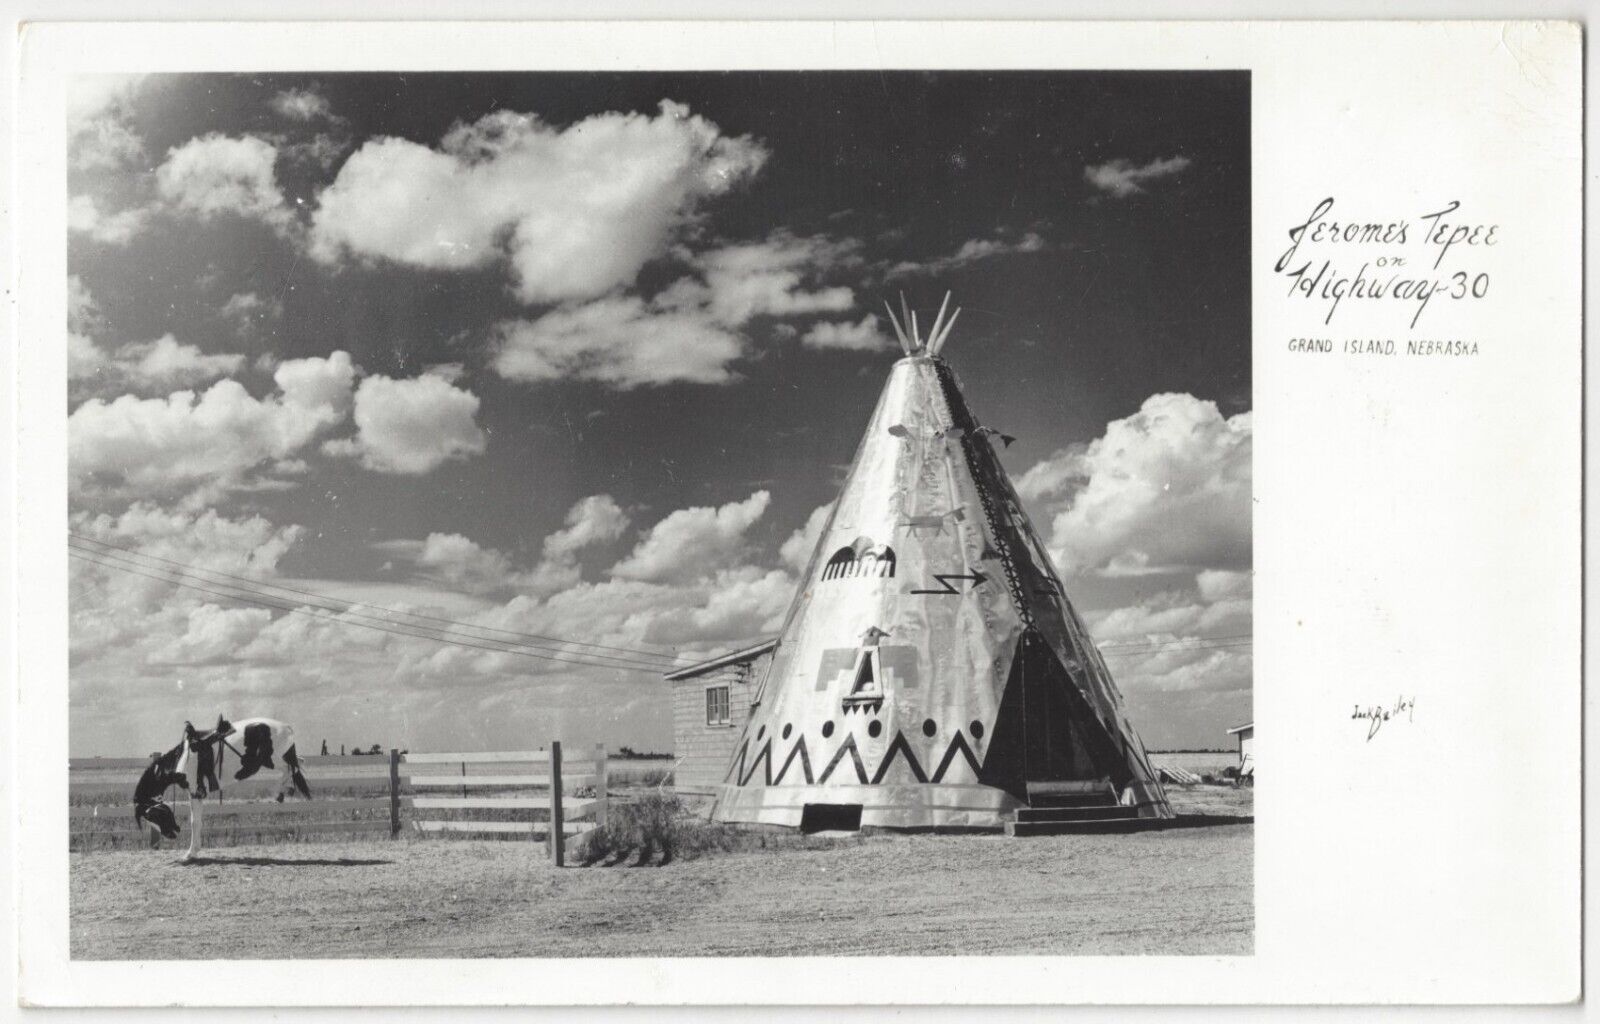 1940 Grand Island, Nebraska - REAL PHOTO Roadside Tepee